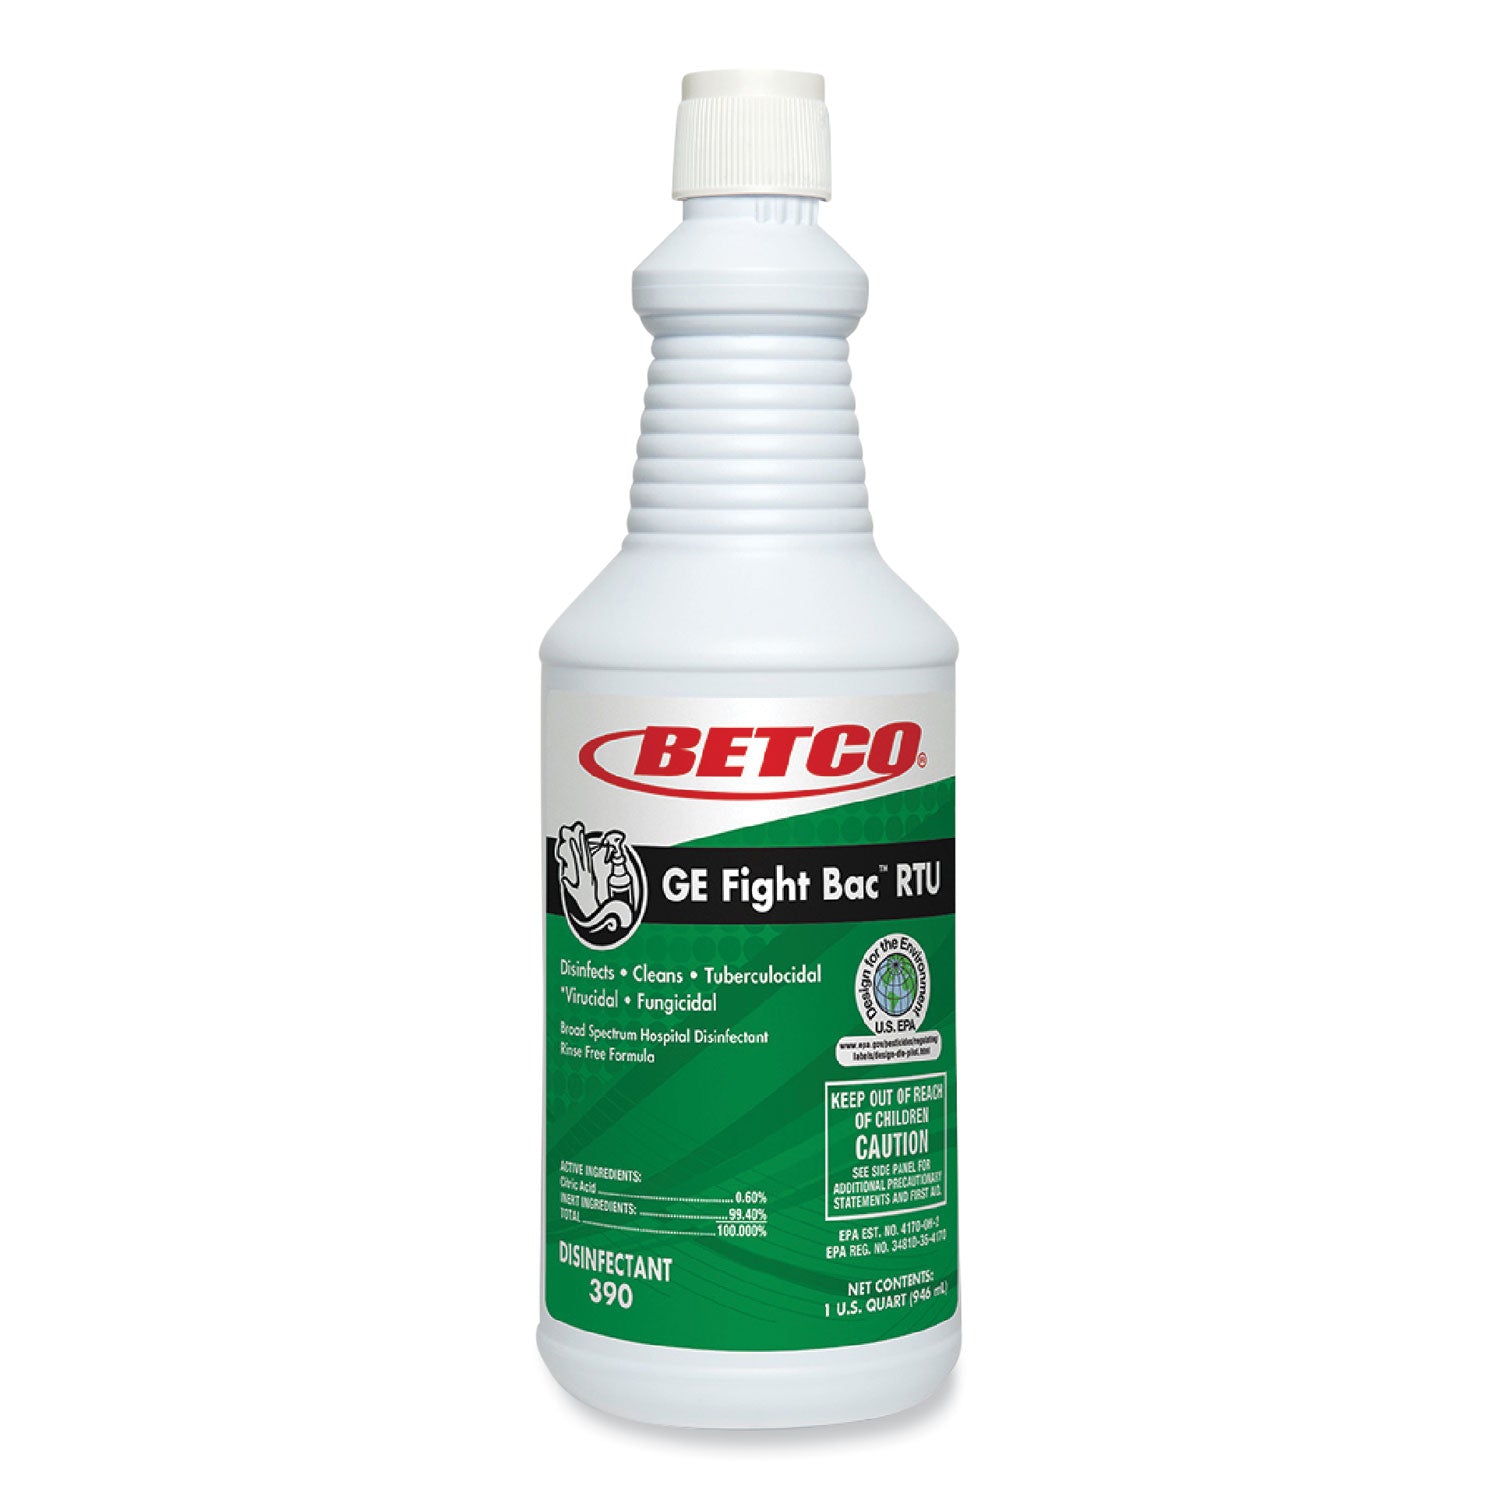 ge-fight-bac-rtu-disinfectant-fresh-scent-32-oz-bottle-12-carton_bet3901200 - 1